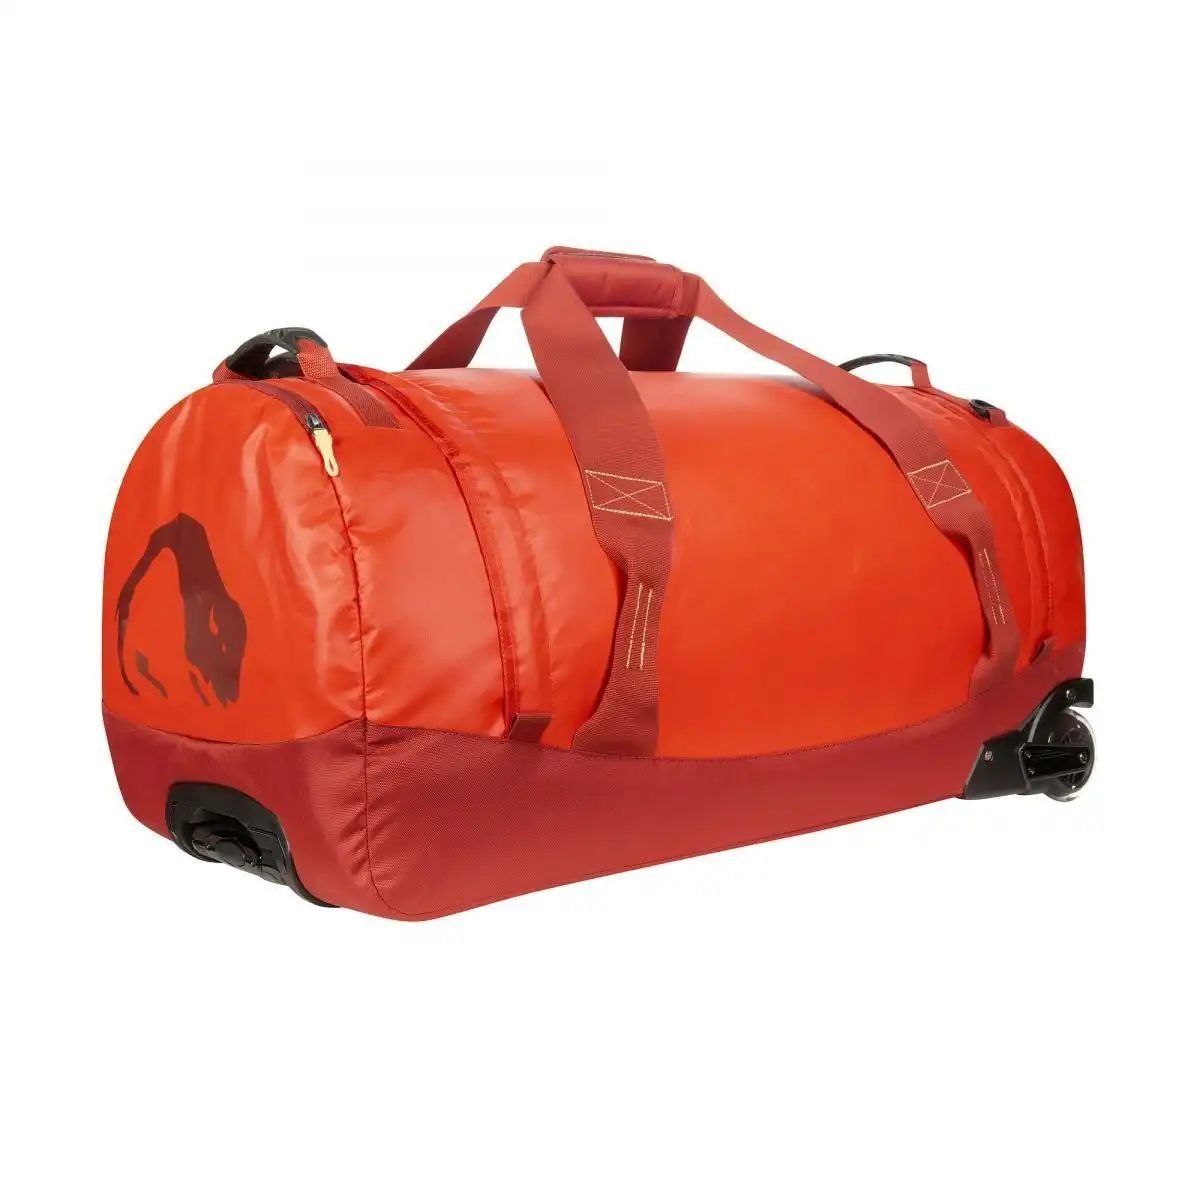 Tatonka 75cm 80L Barrel Travel Bag Roller/Luggage/Suitcase w/ Wheels Red Orange